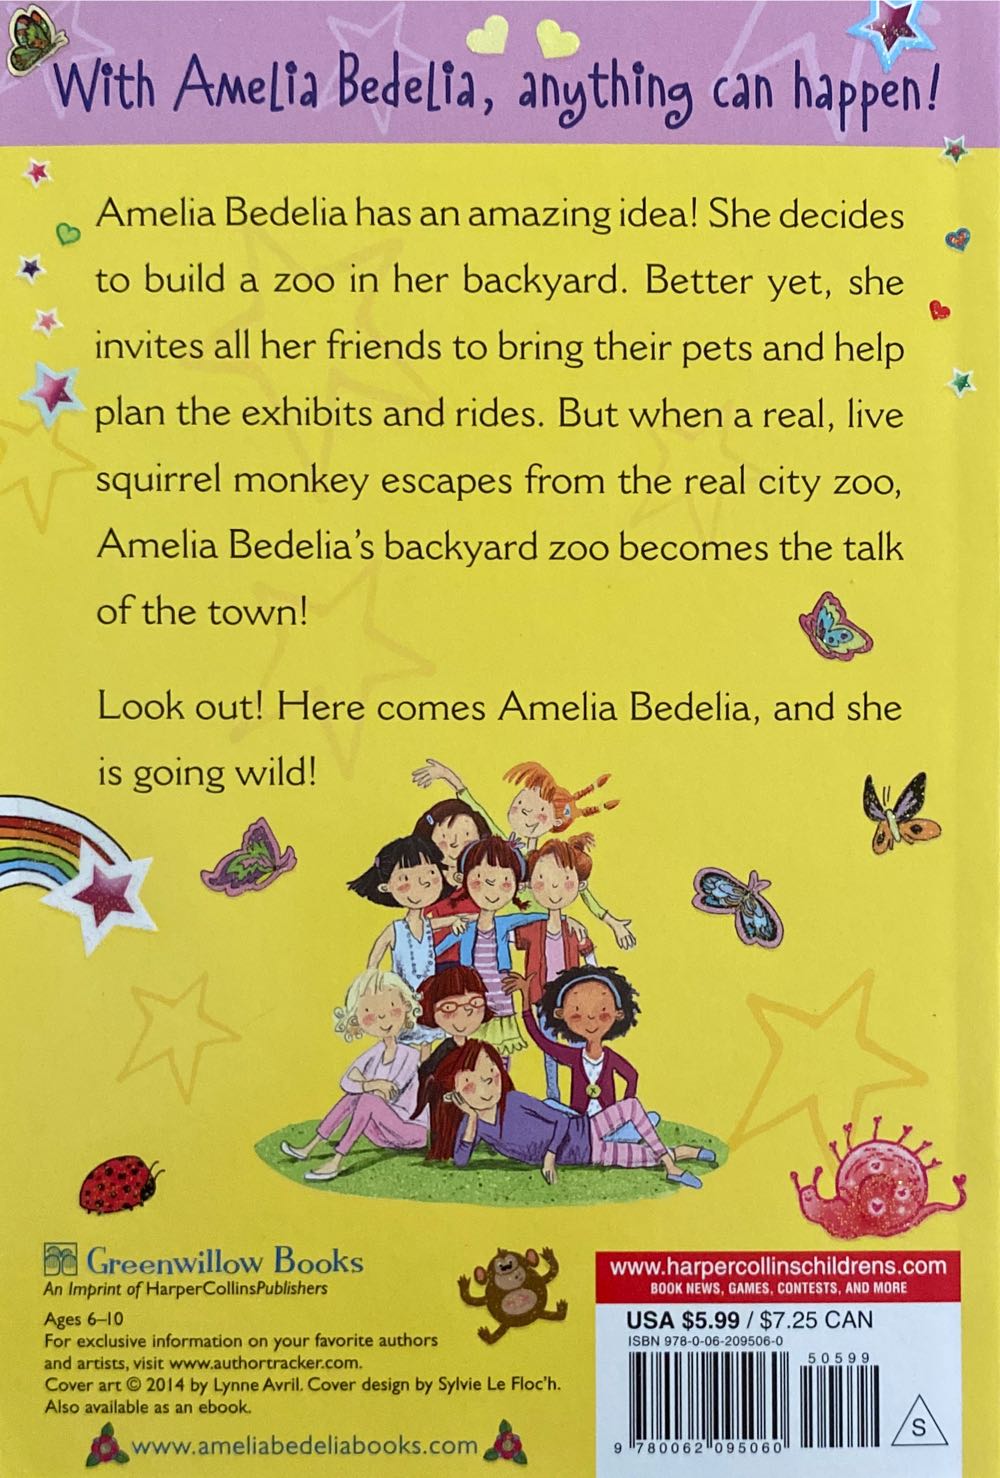 Amelia Bedelia Goes Wild! - Herman Parish (Greenwillow Books - Paperback) book collectible [Barcode 9780062095060] - Main Image 2